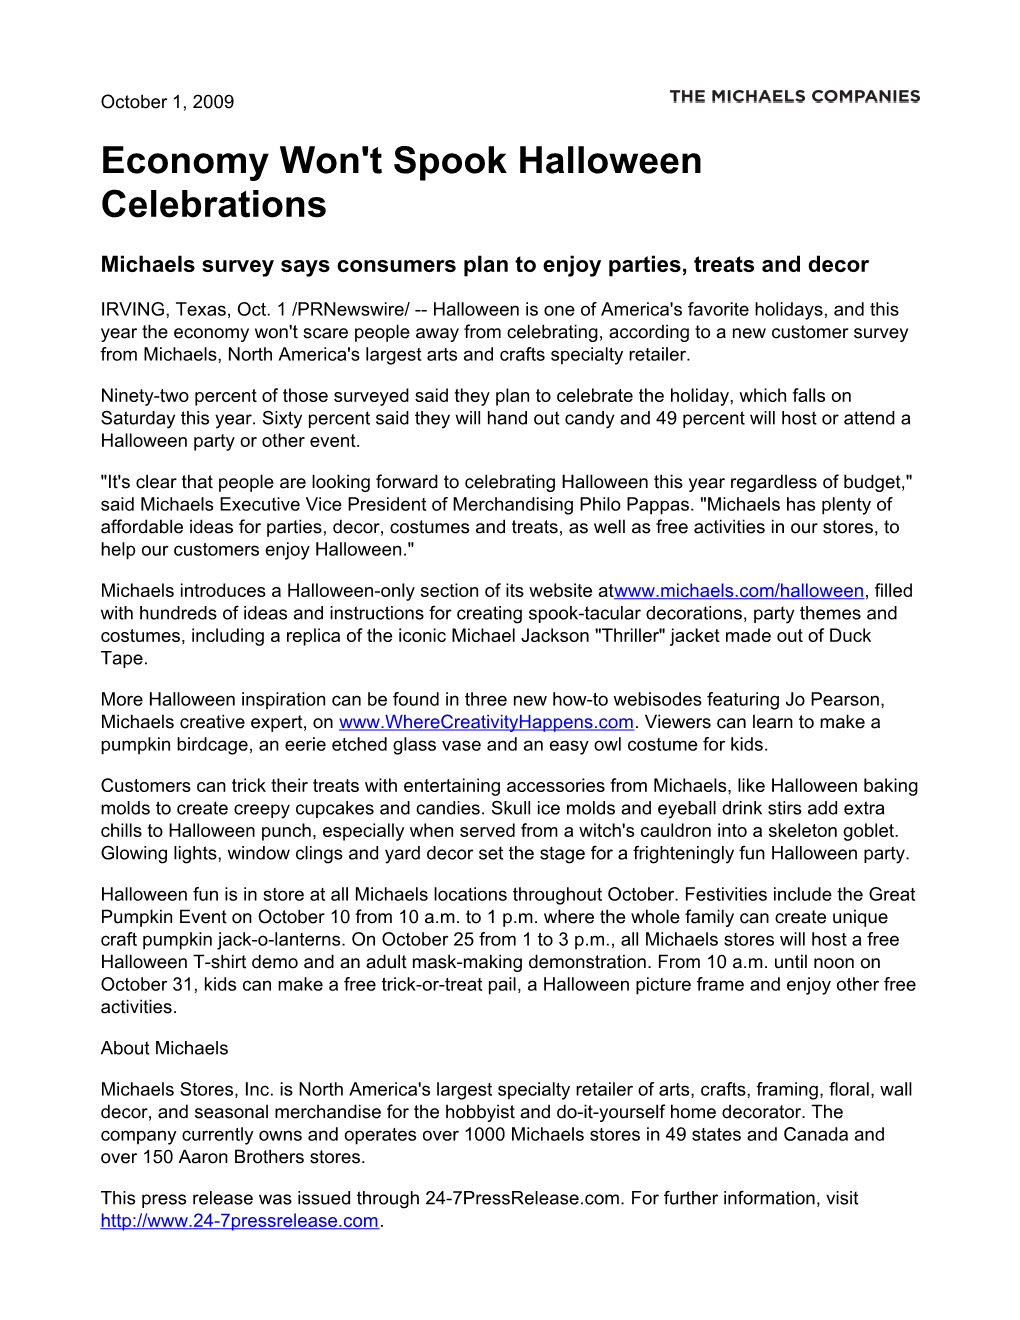 Economy Won't Spook Halloween Celebrations